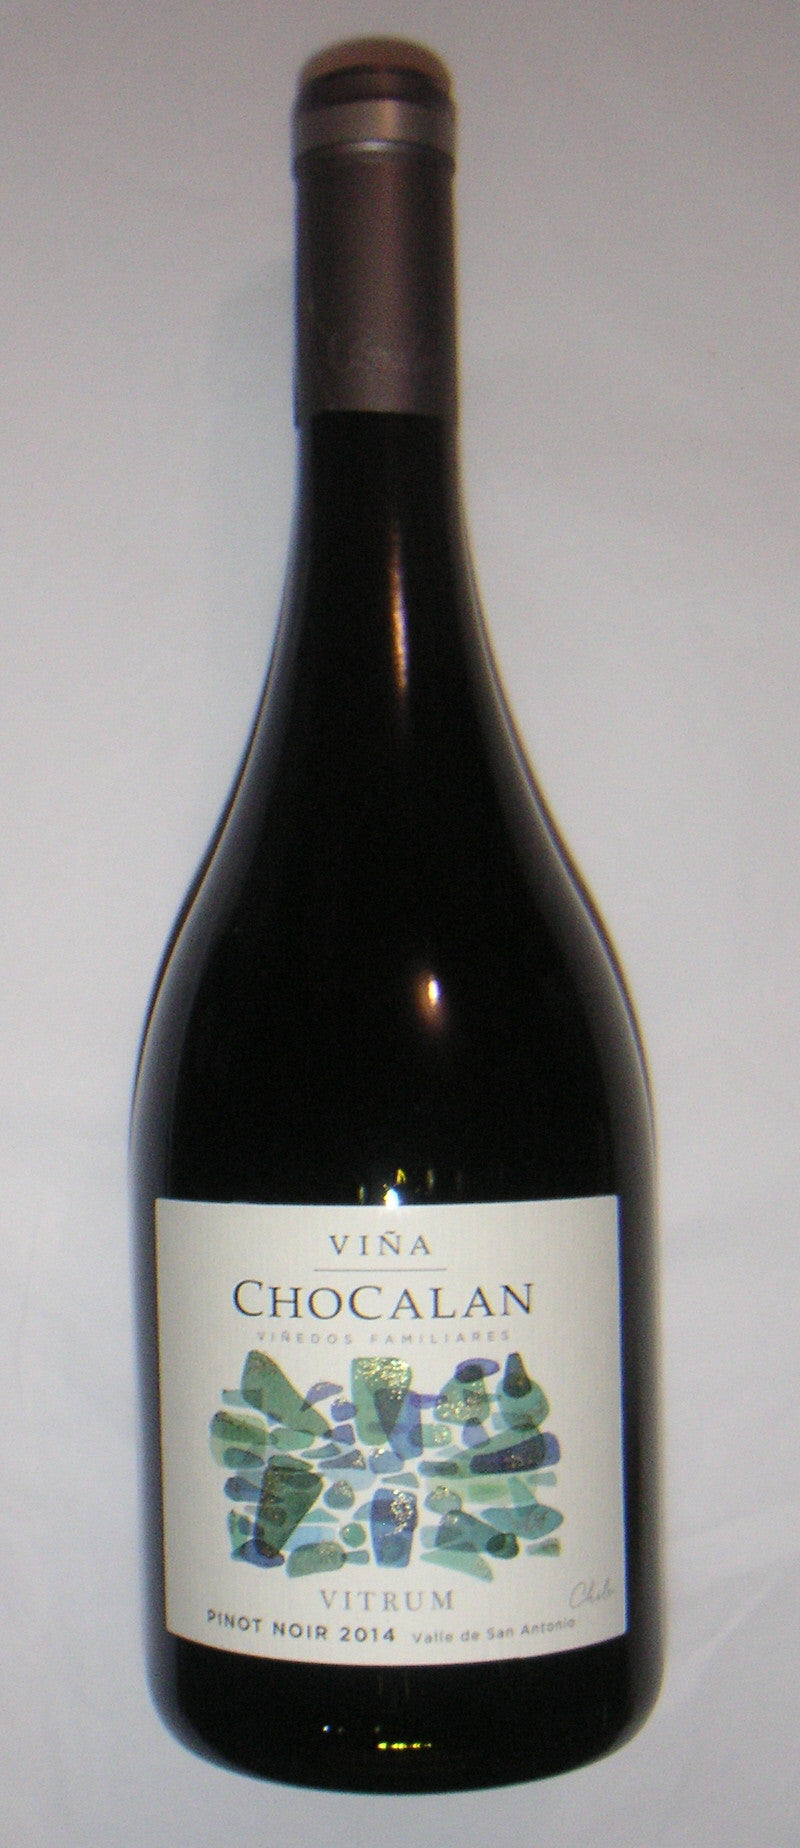 Vitrum Pinot Noir 2014 Chocalan Chile